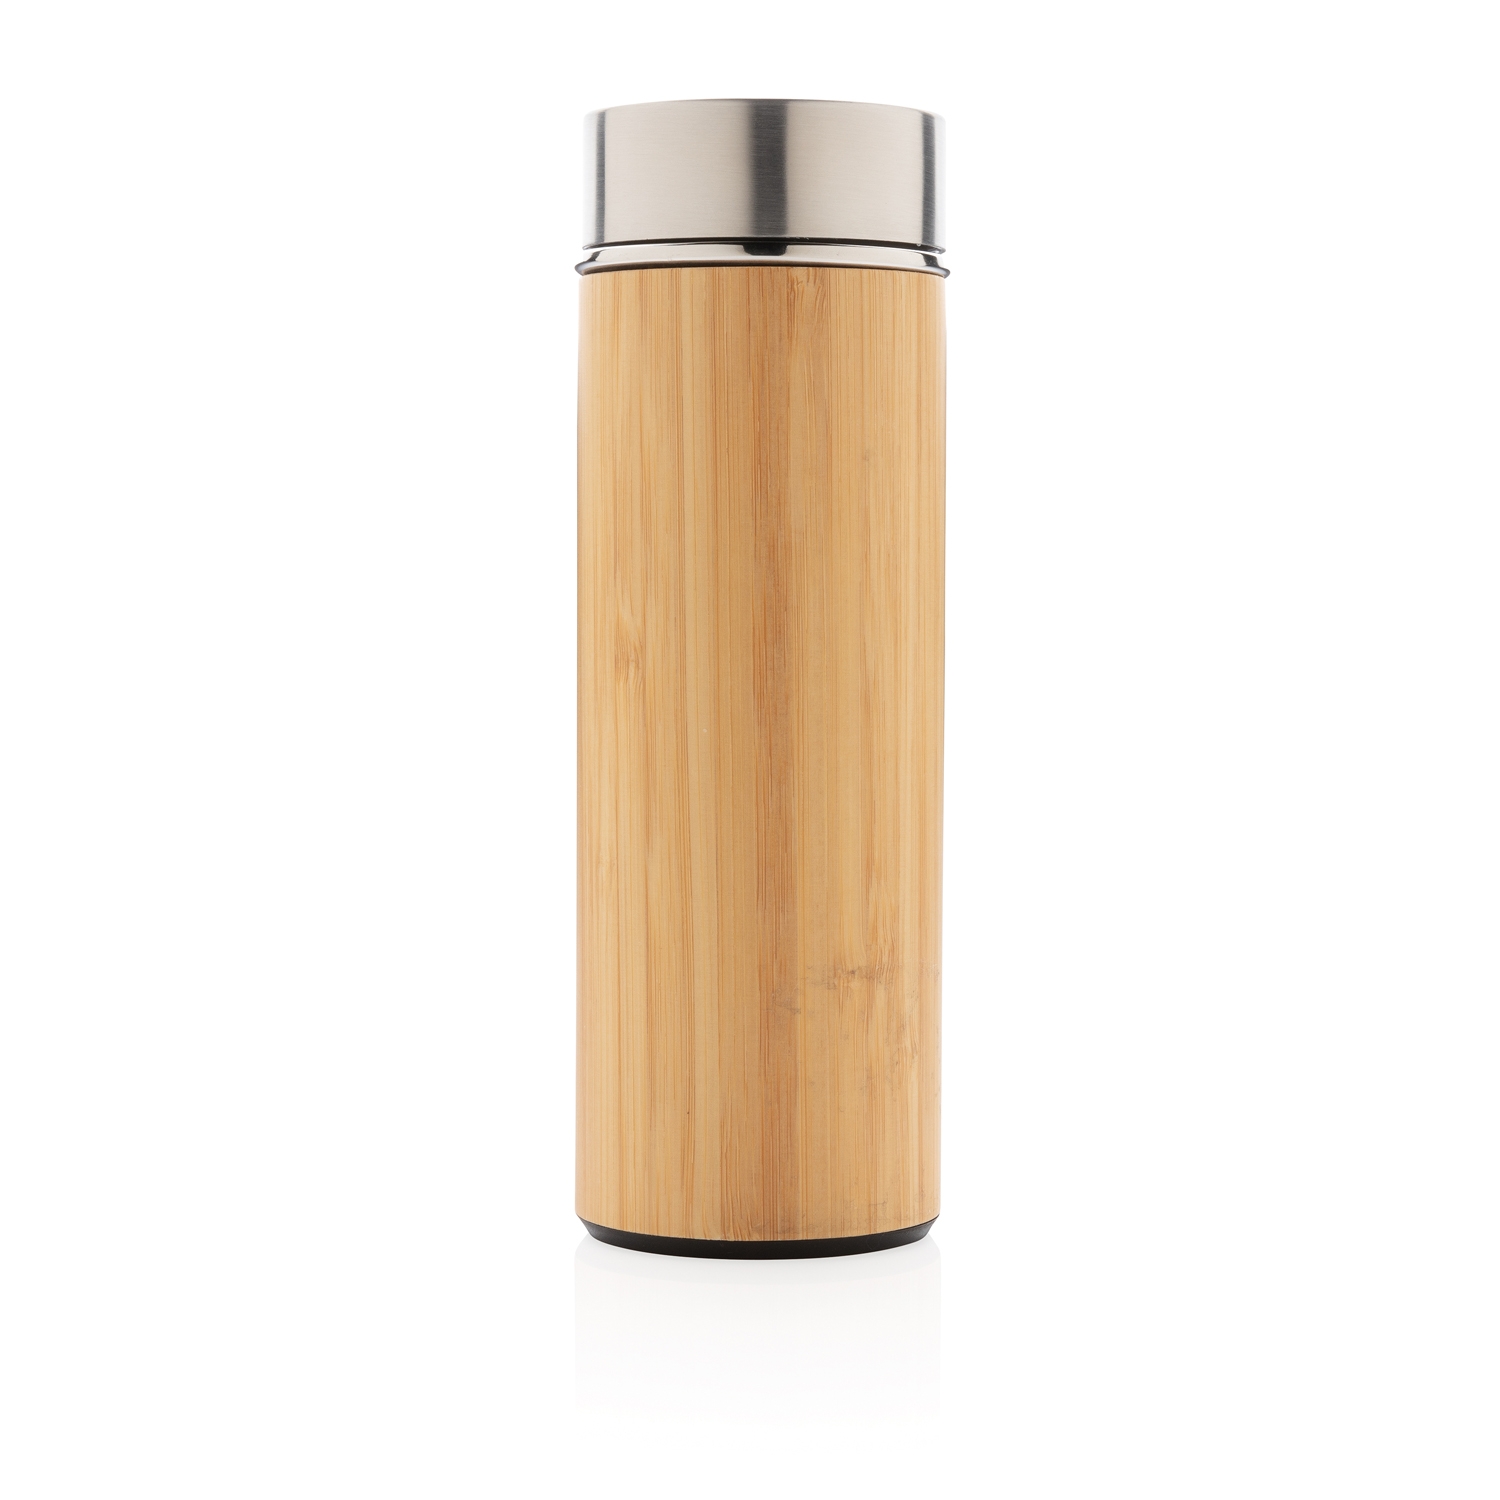 Герметичная вакуумная бутылка Bamboo, 350 мл, коричневый, дерево, металл